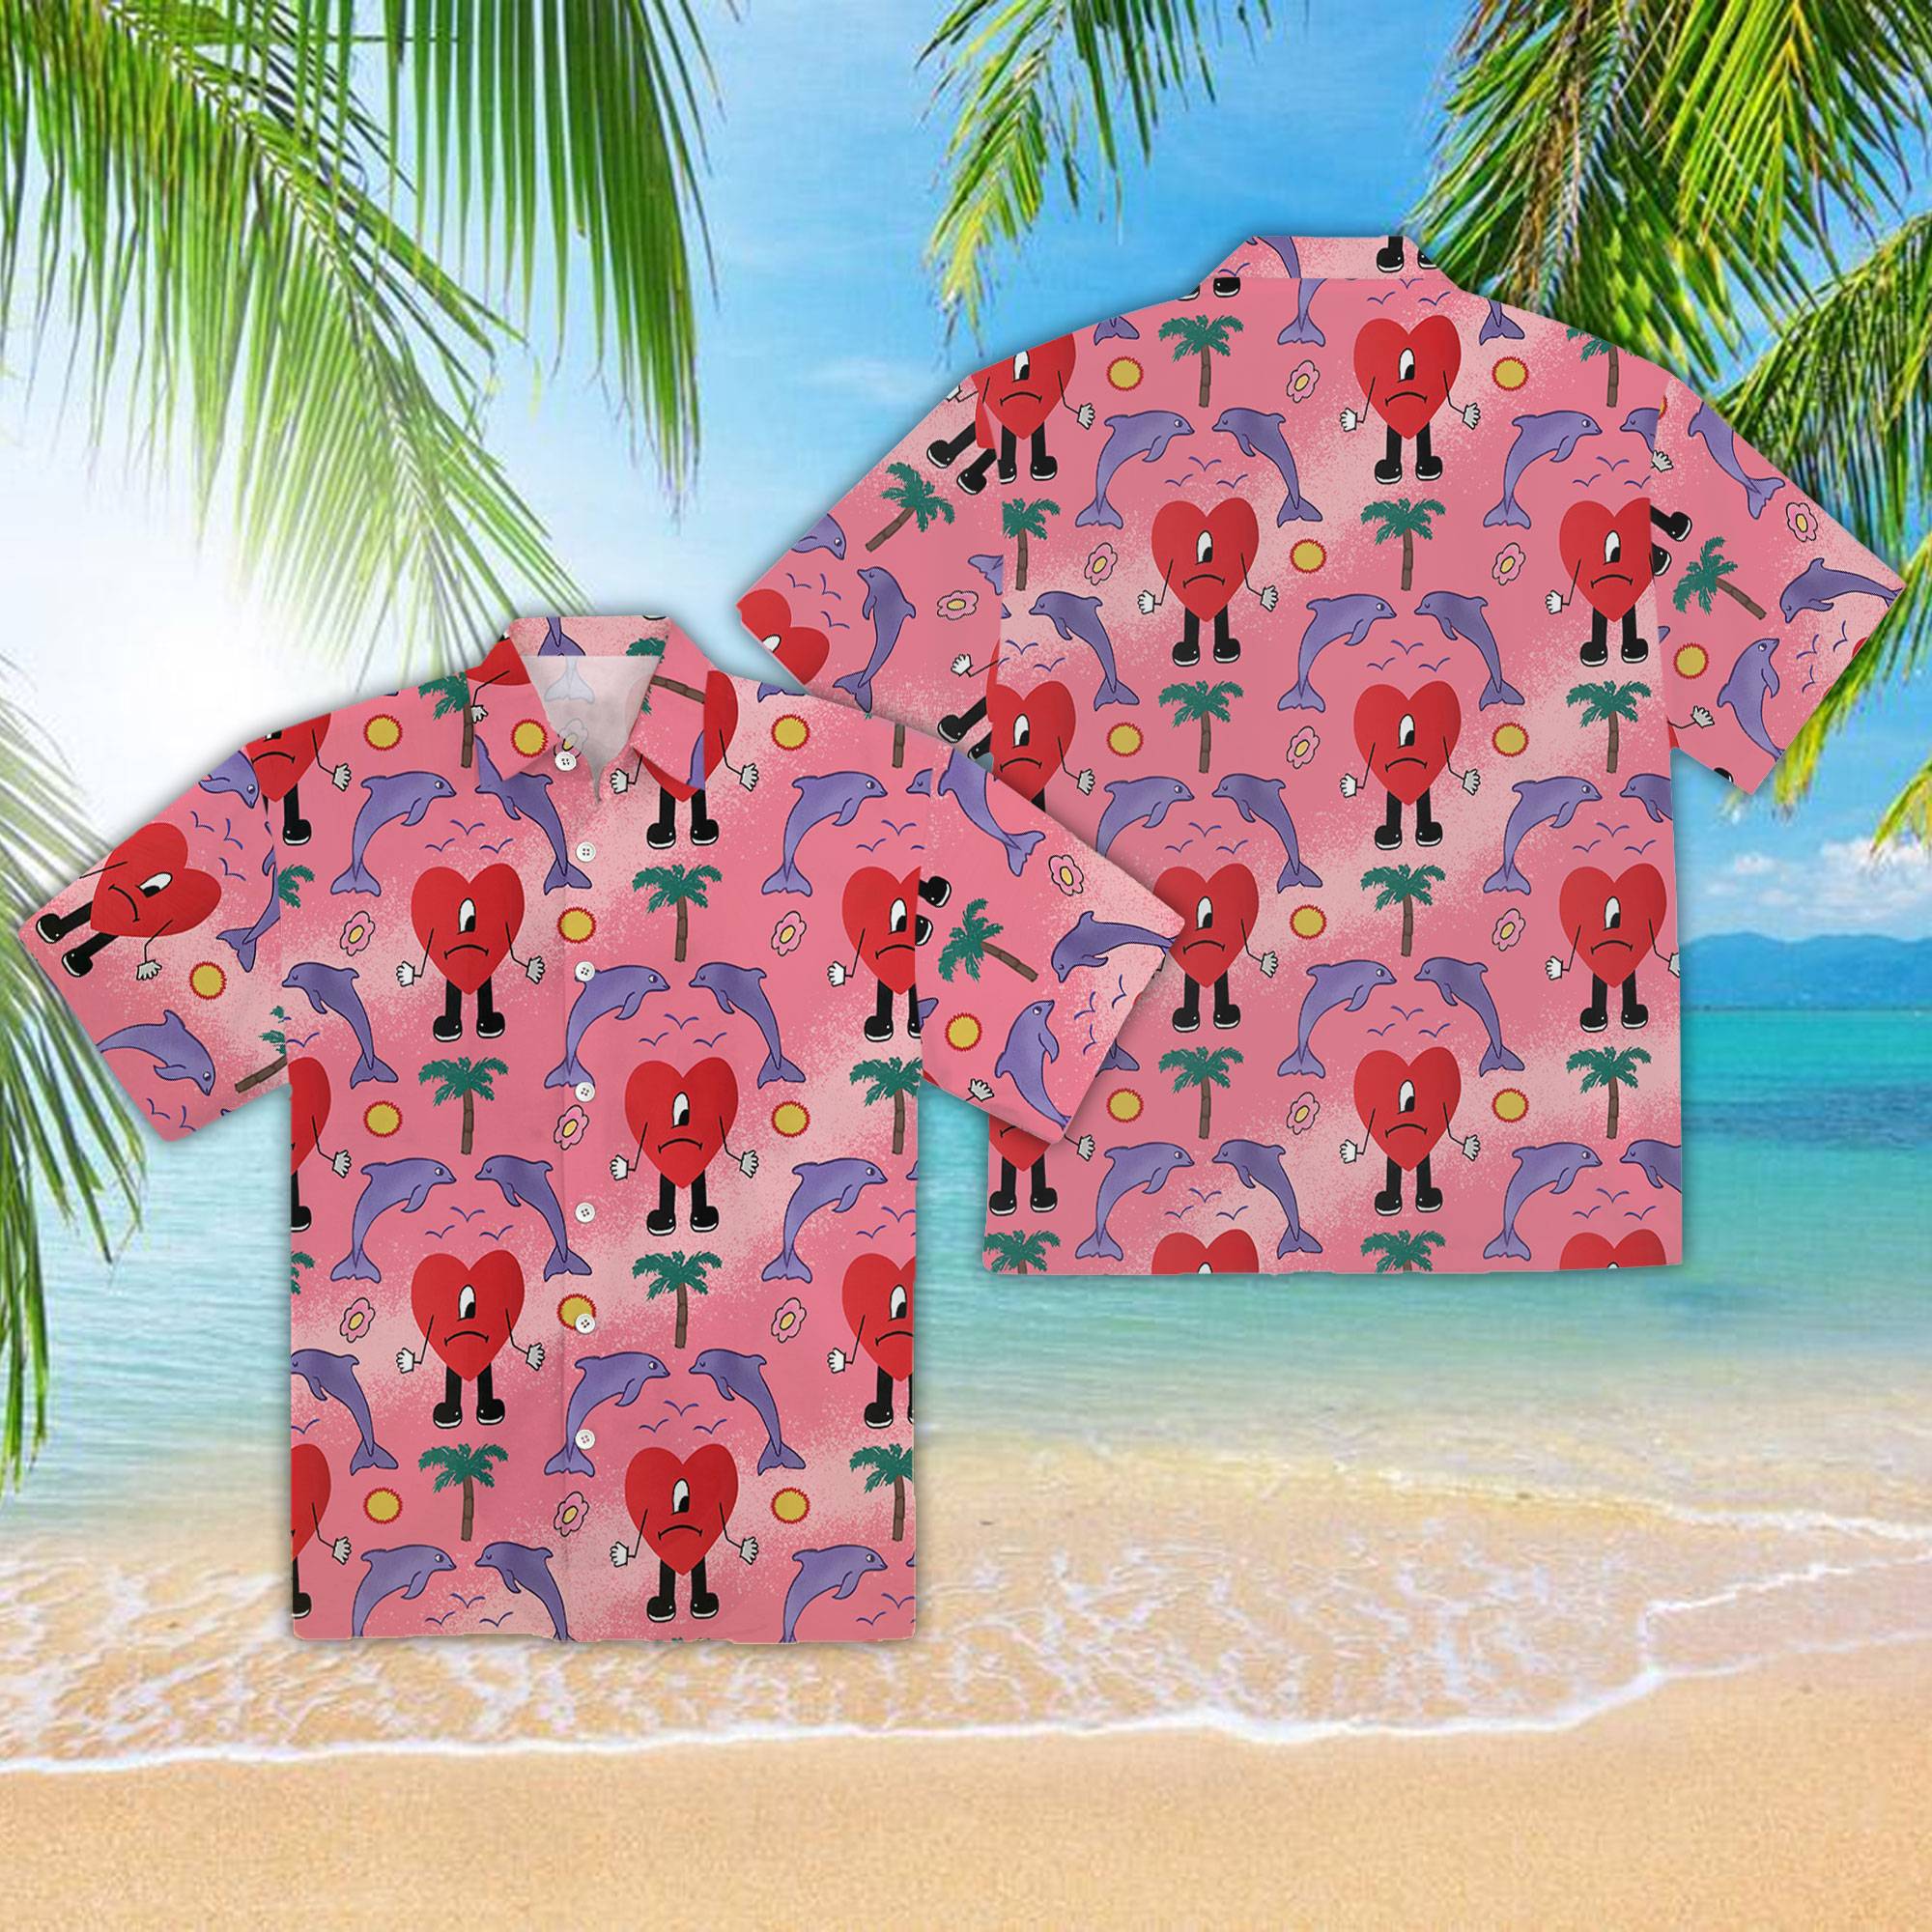 Bad-Bunny Dodgers Un Verano Sin Ti Trendy Hawaiian Shirt - Trendy